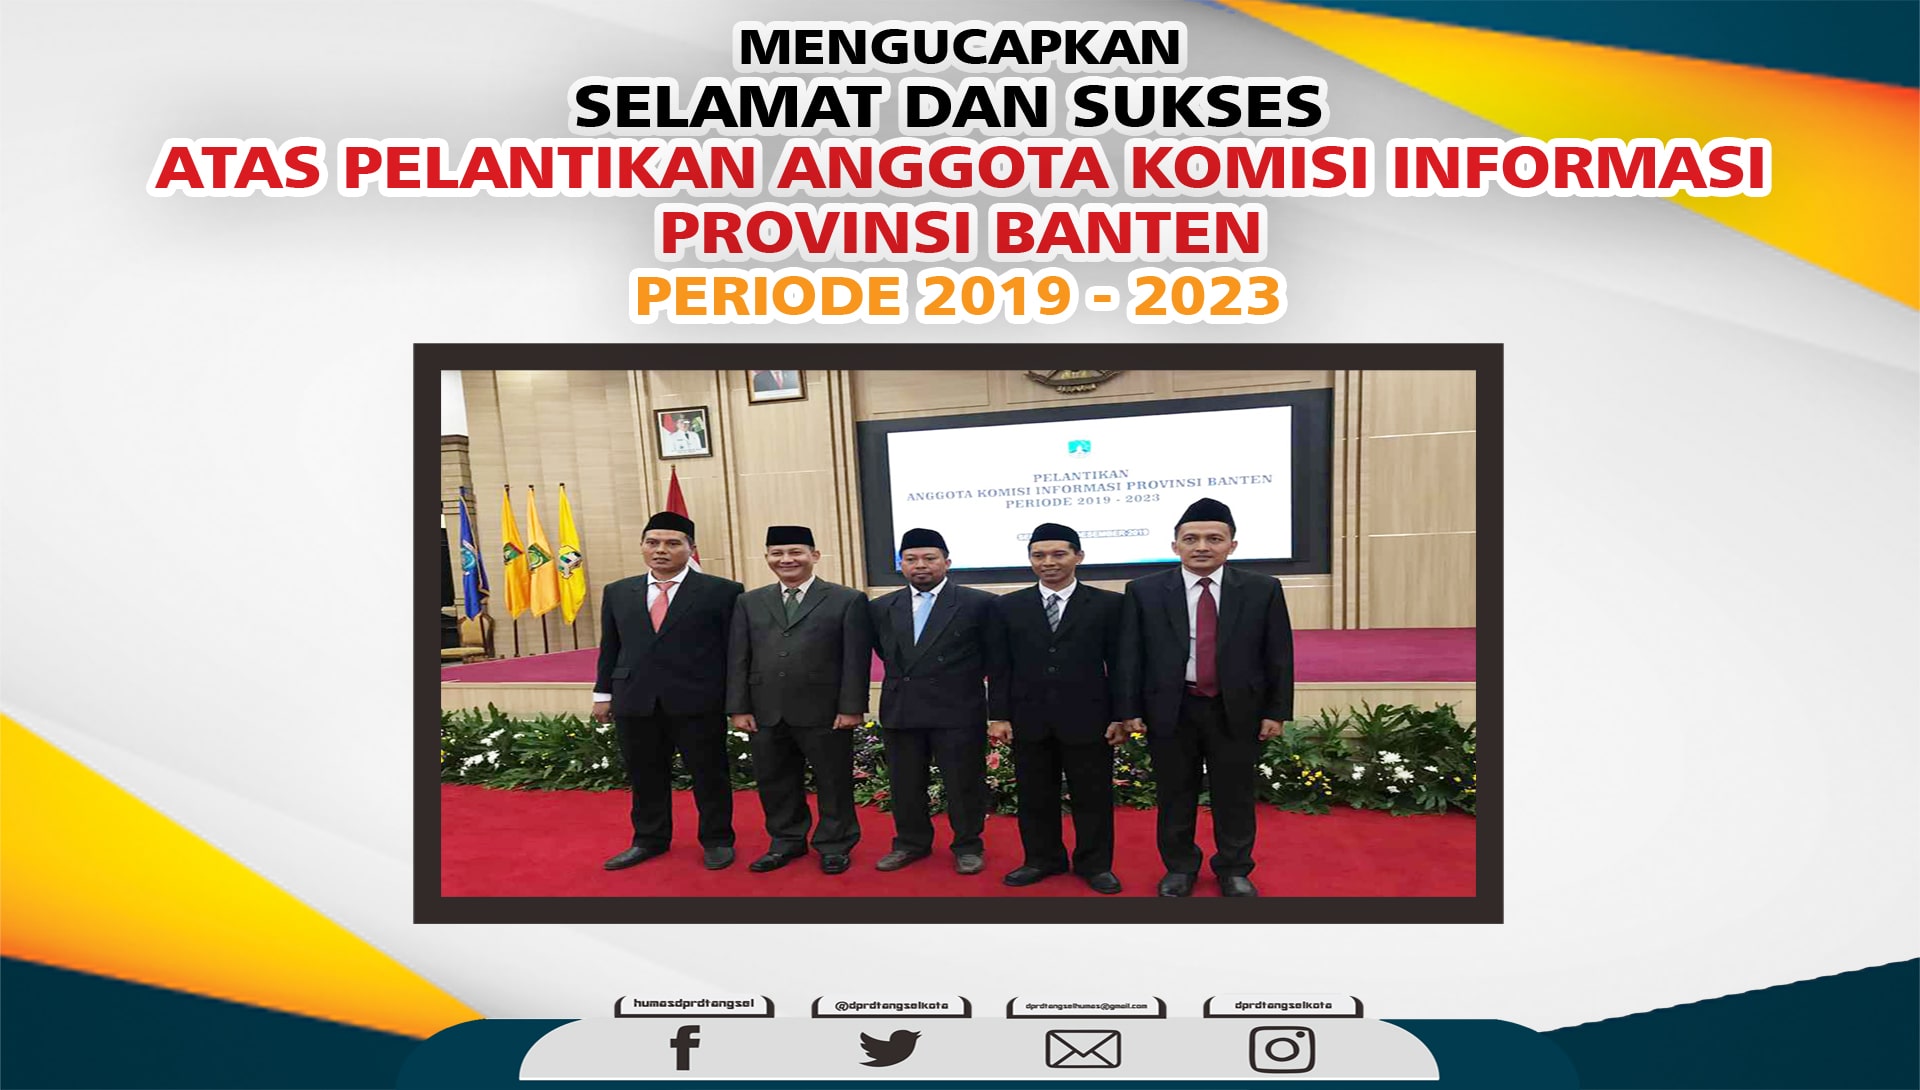 Selamat Atas Pelantikan Anggota Komisi Informasi Provinsi Banten 